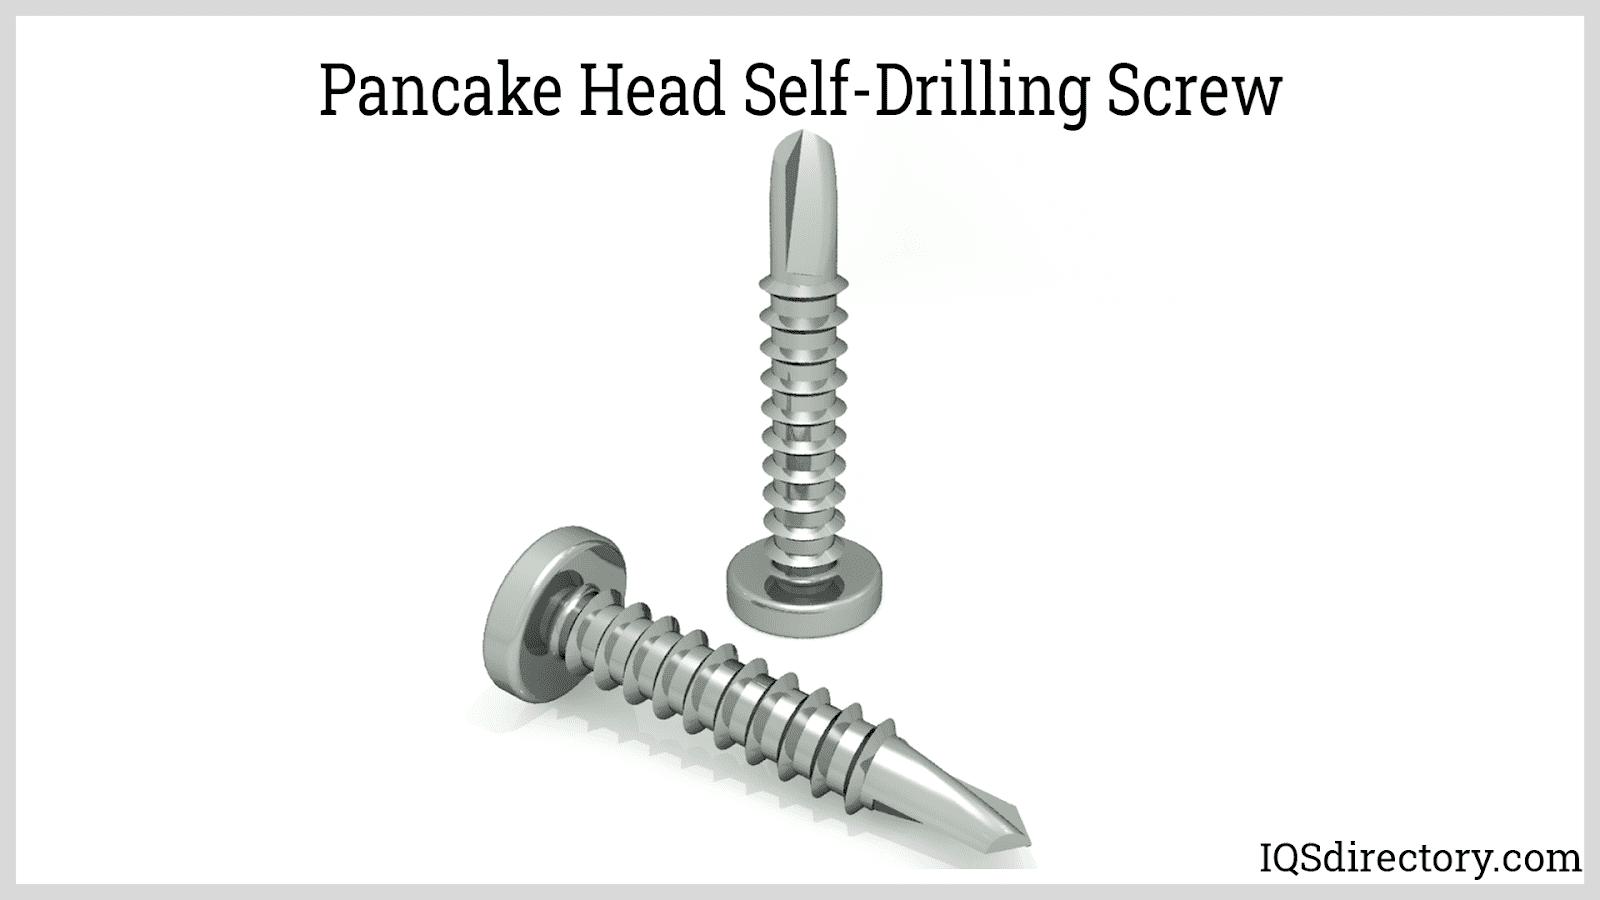 Pancake Head Self-Drilling Screw